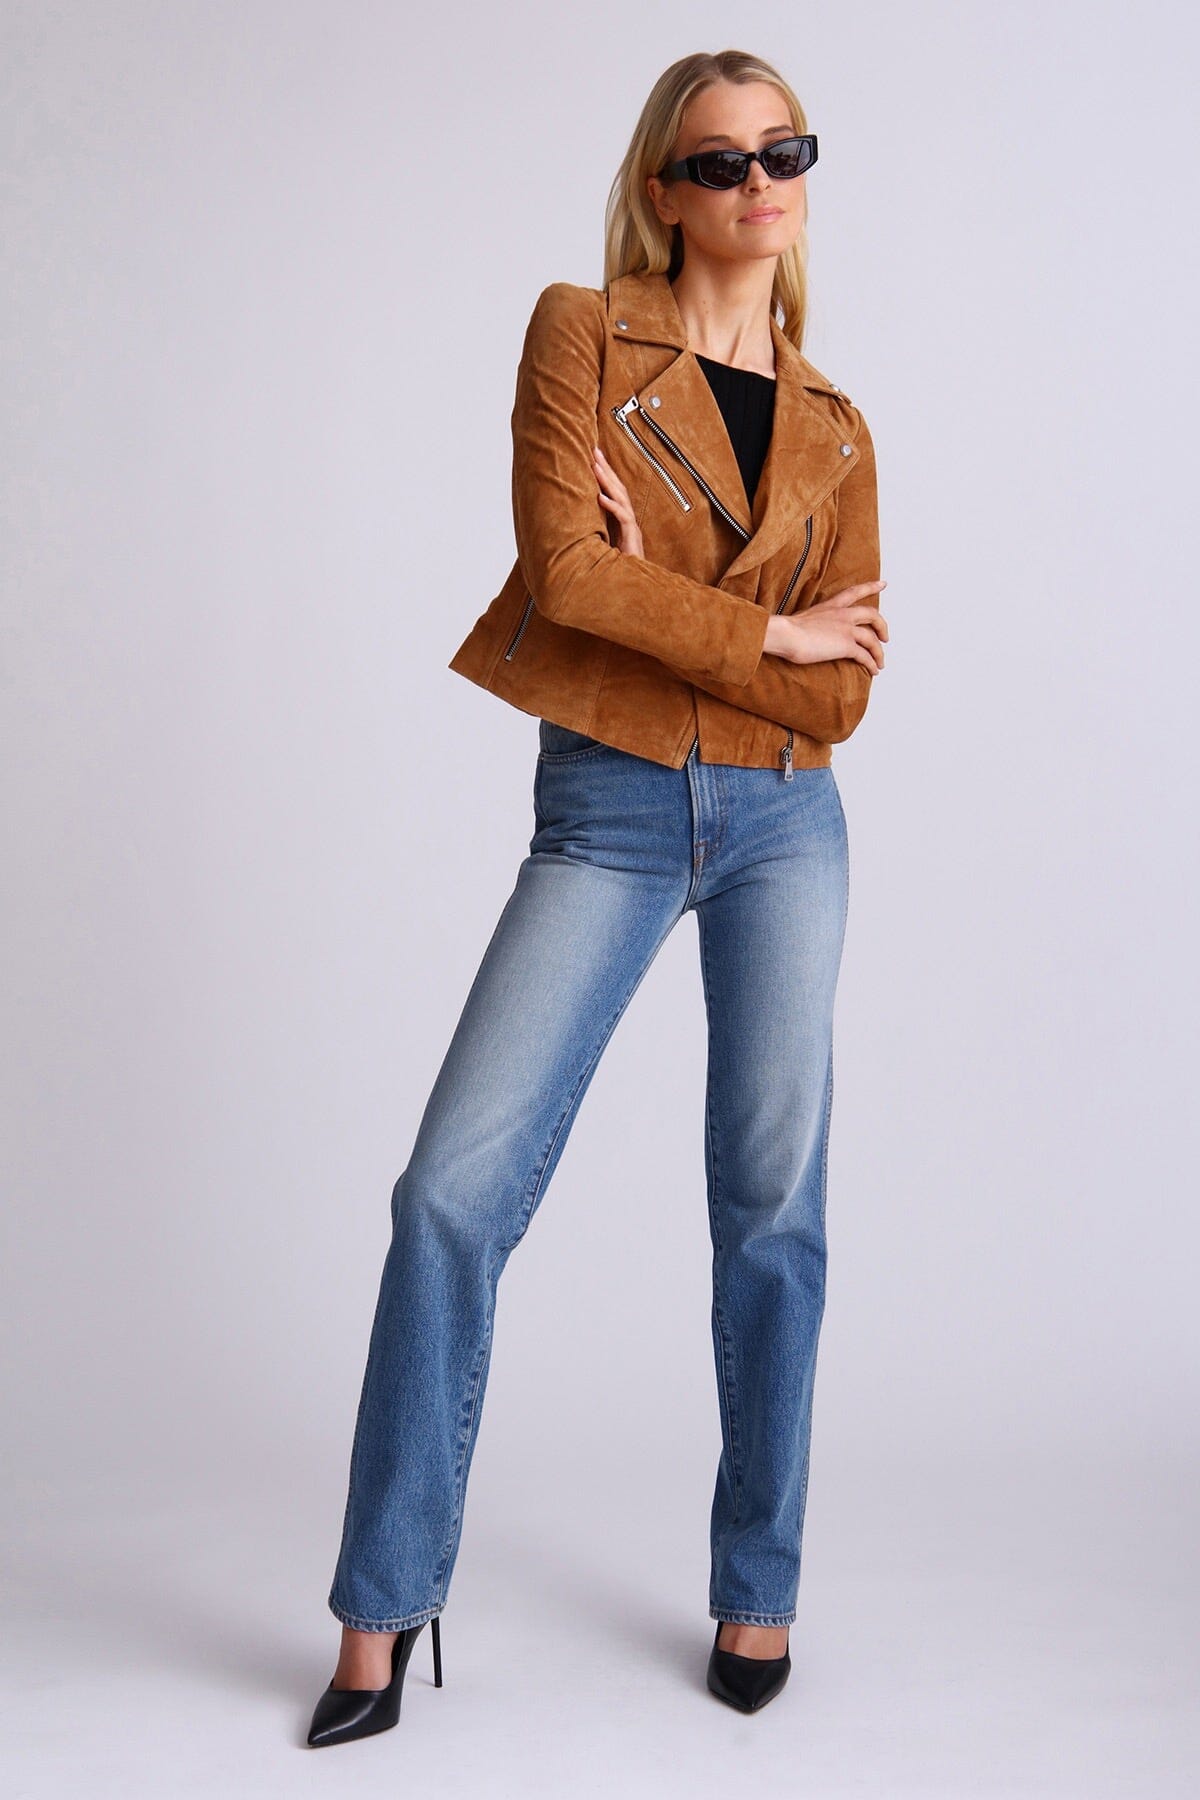 Brown Genuine Suede Biker Jacket Outerwear Bagatelle NYC fashion for women 